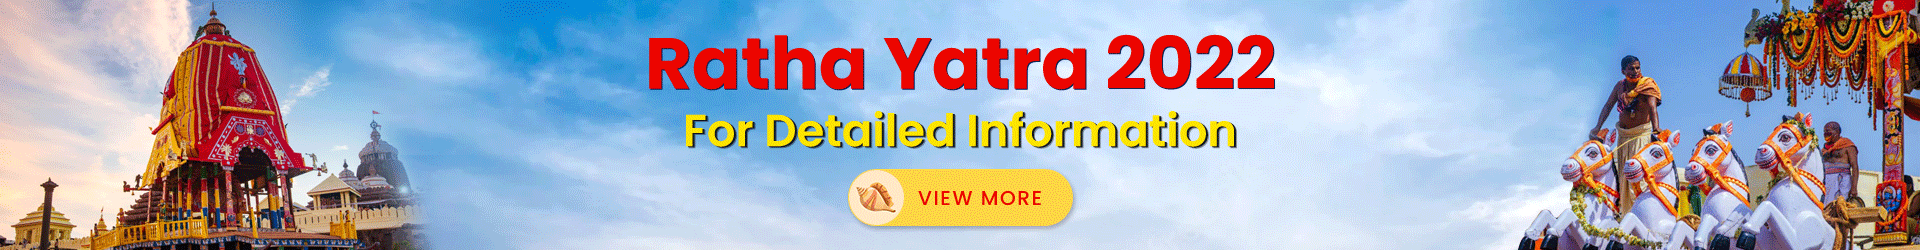 Ratha Yatra 2022